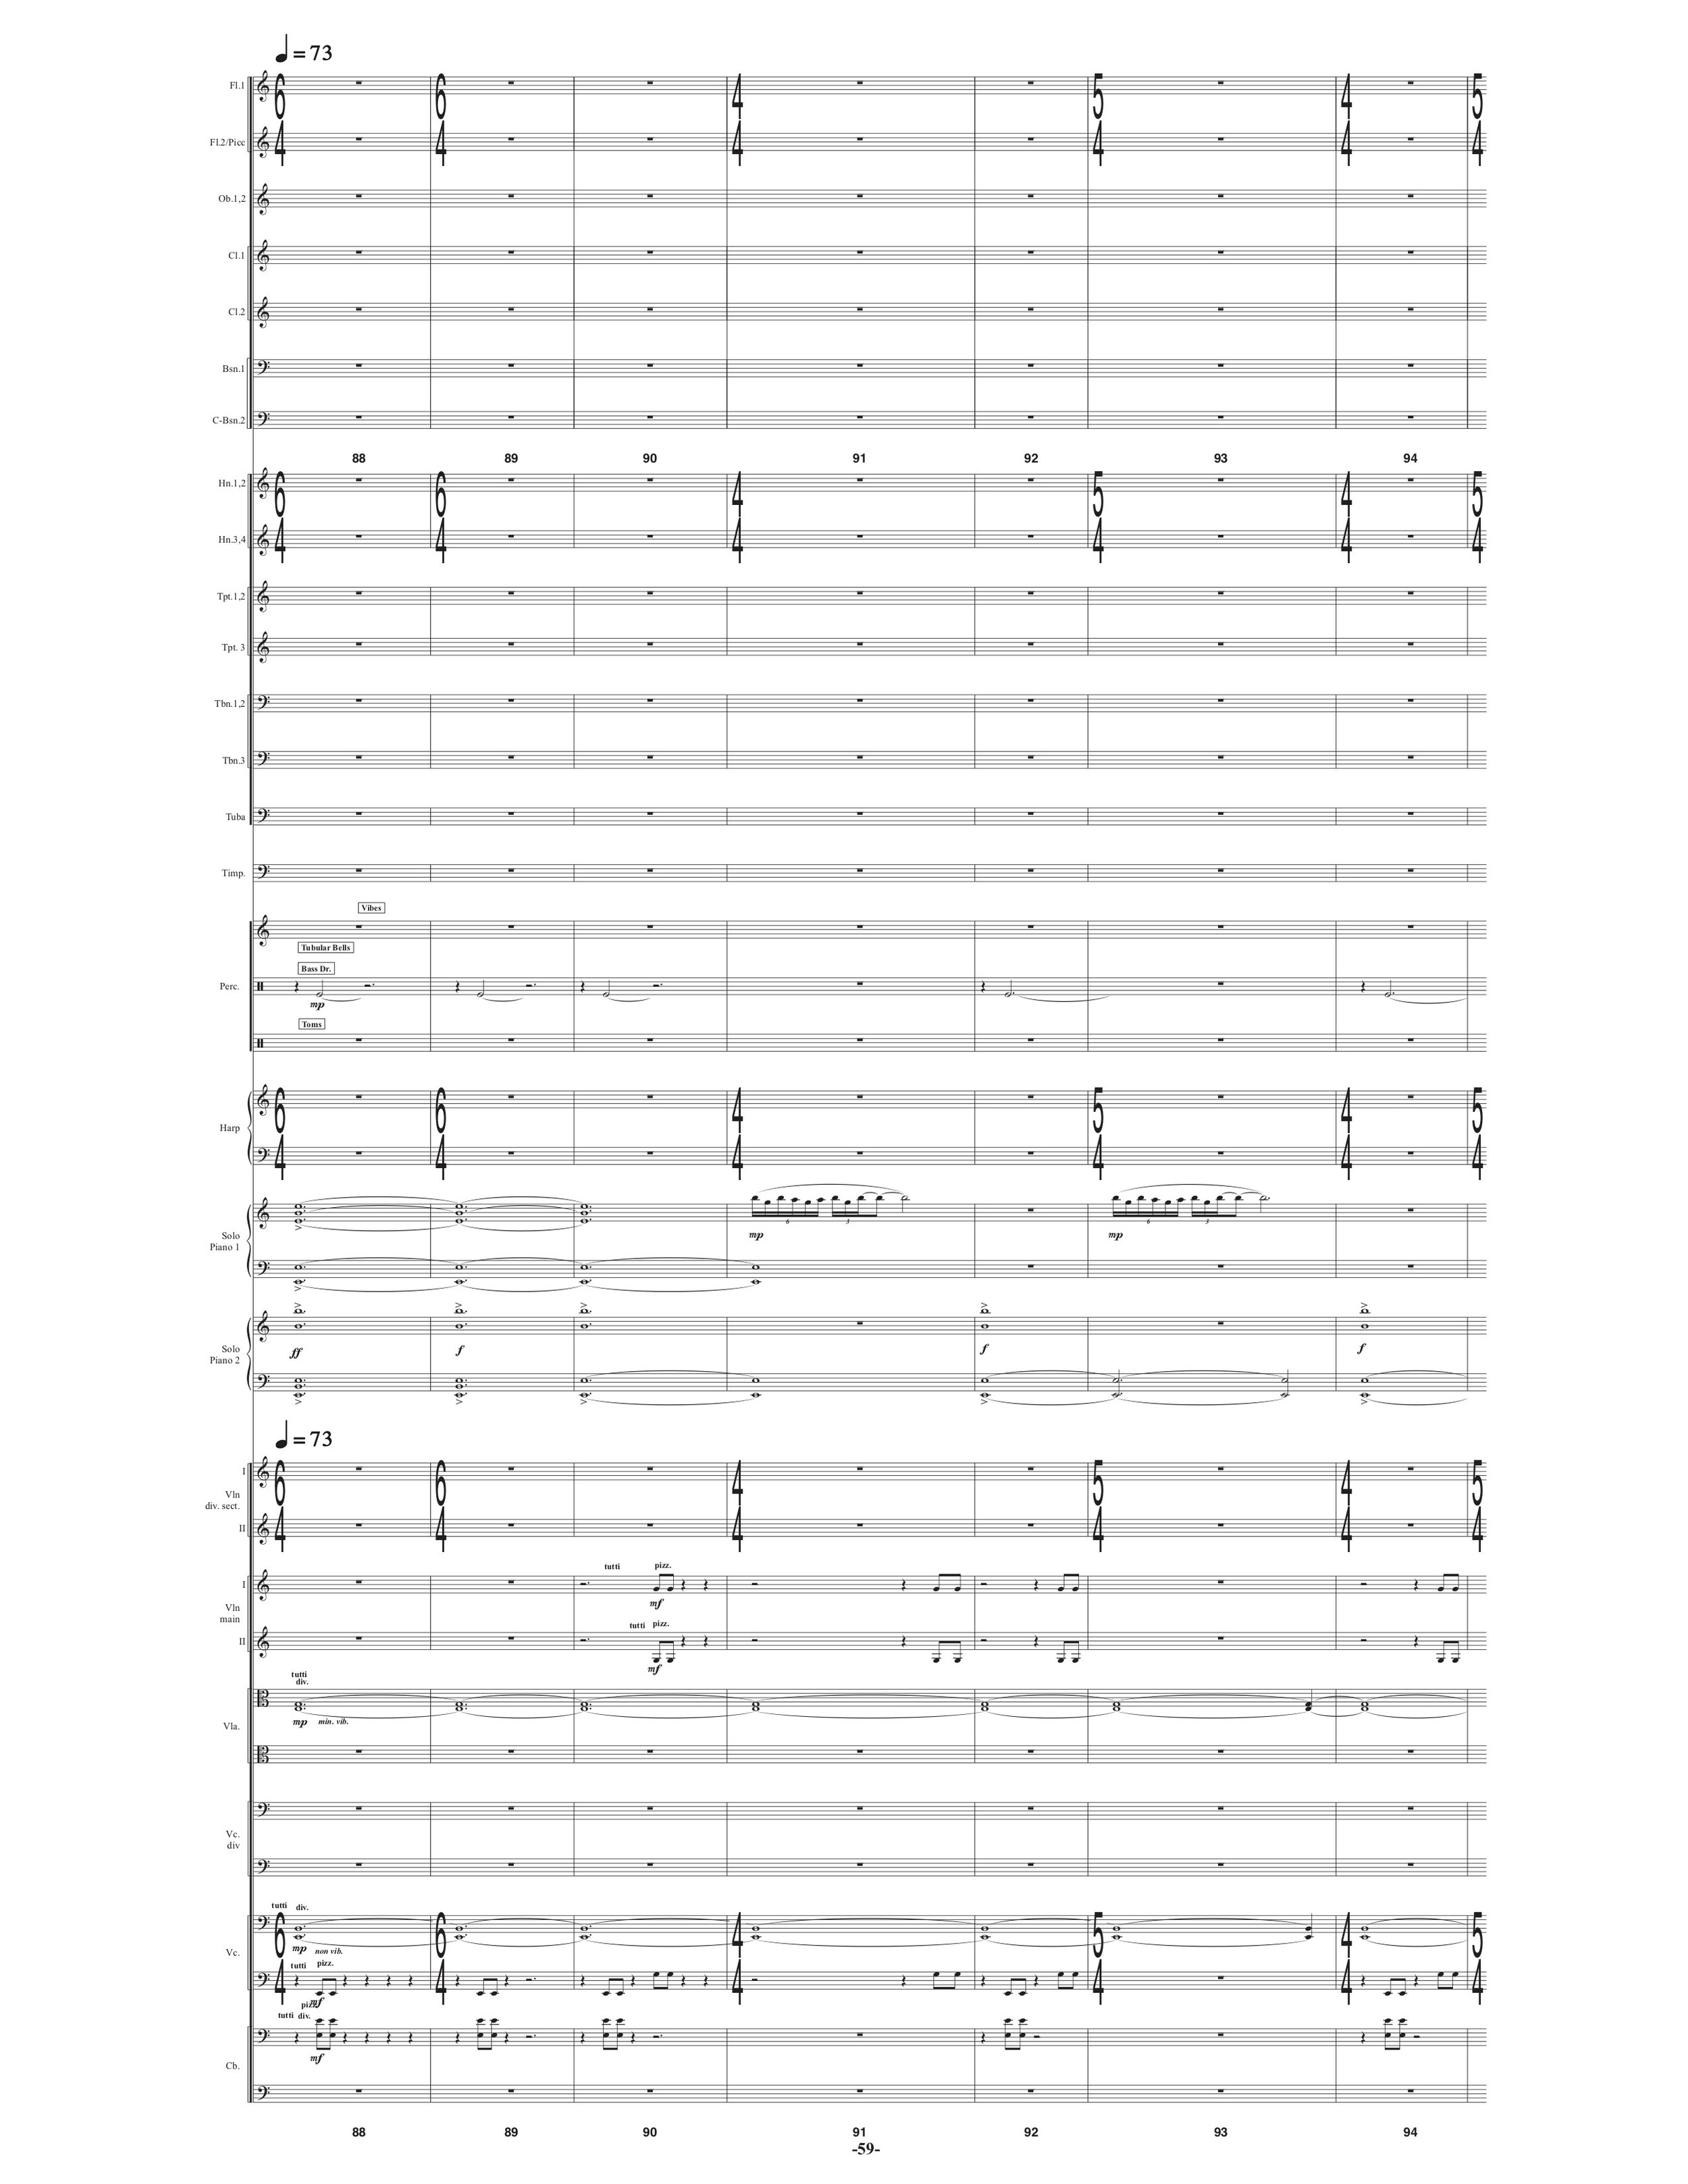 Symphony_Orch & 2 Pianos p64.jpg